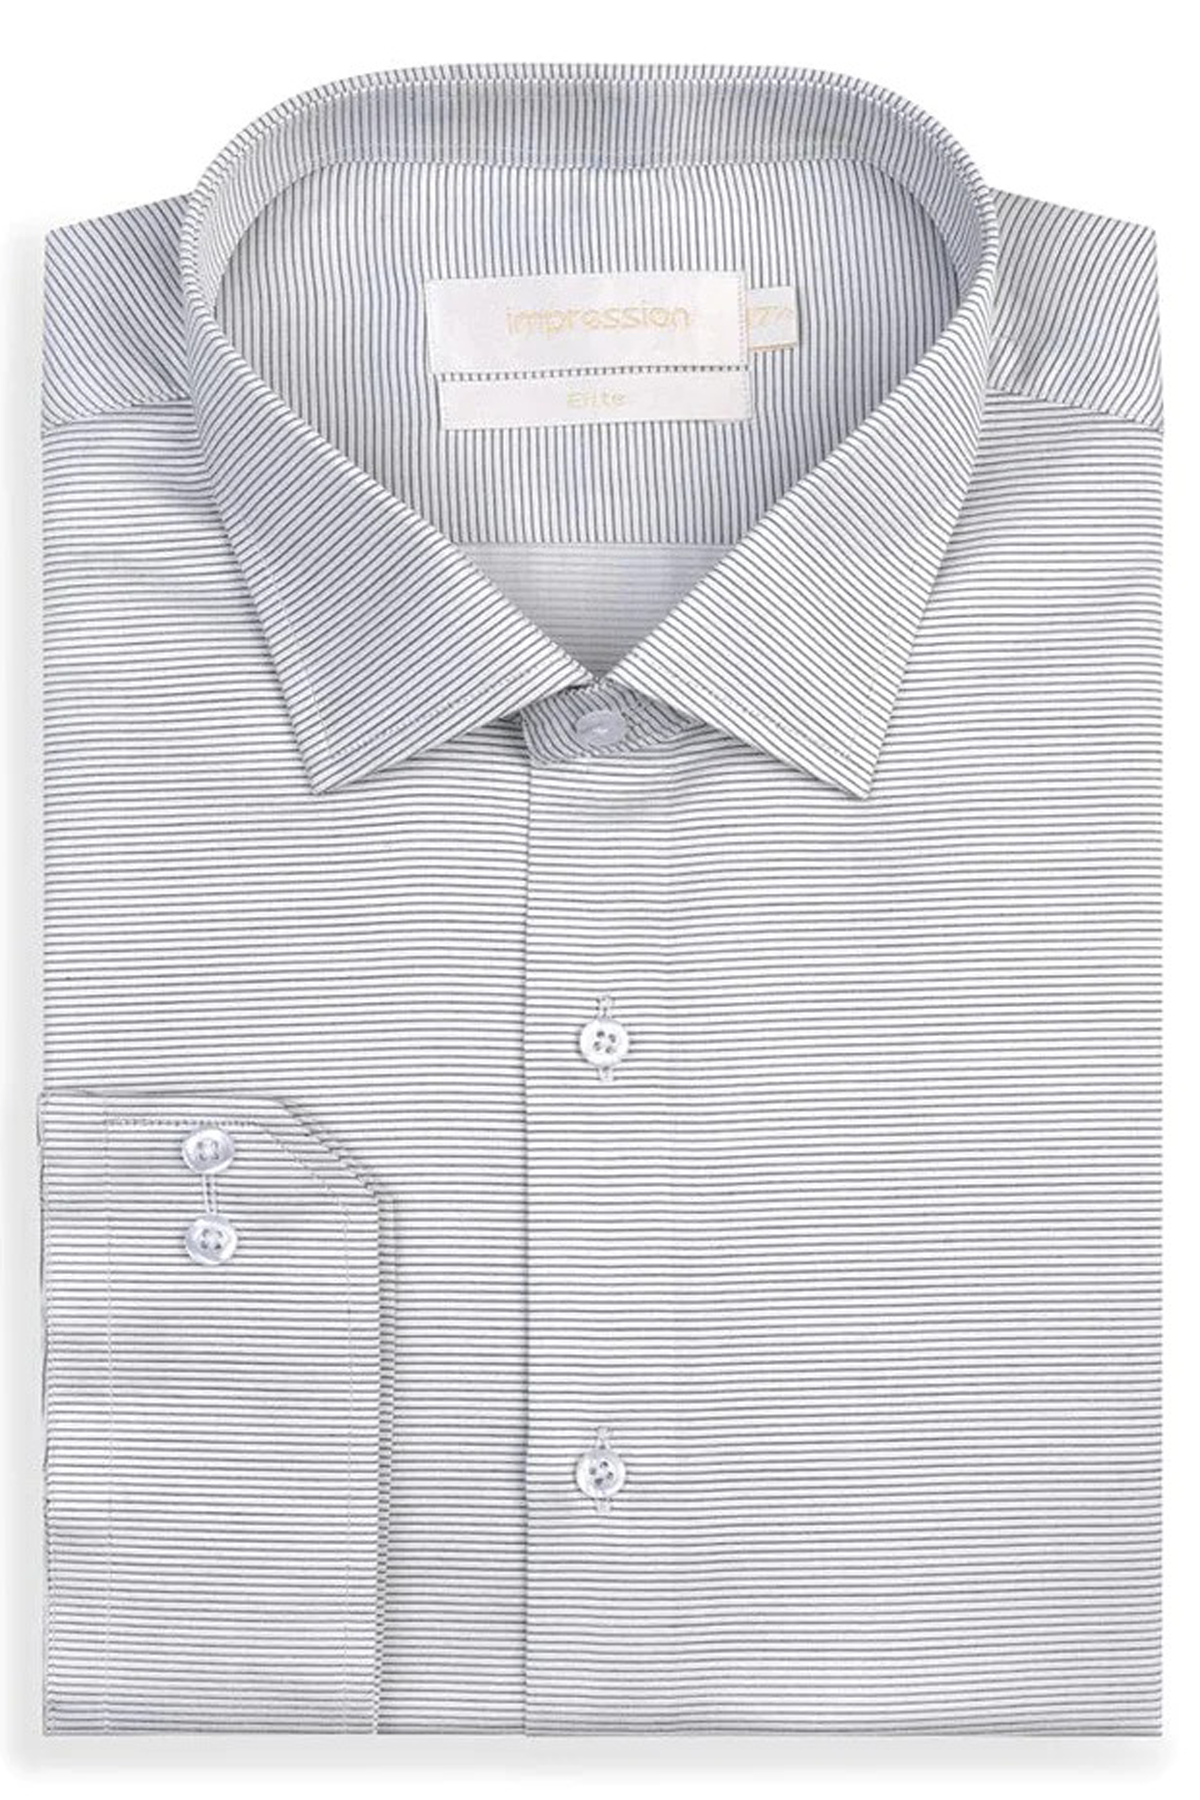 Grey and White Lining Dress Shirt